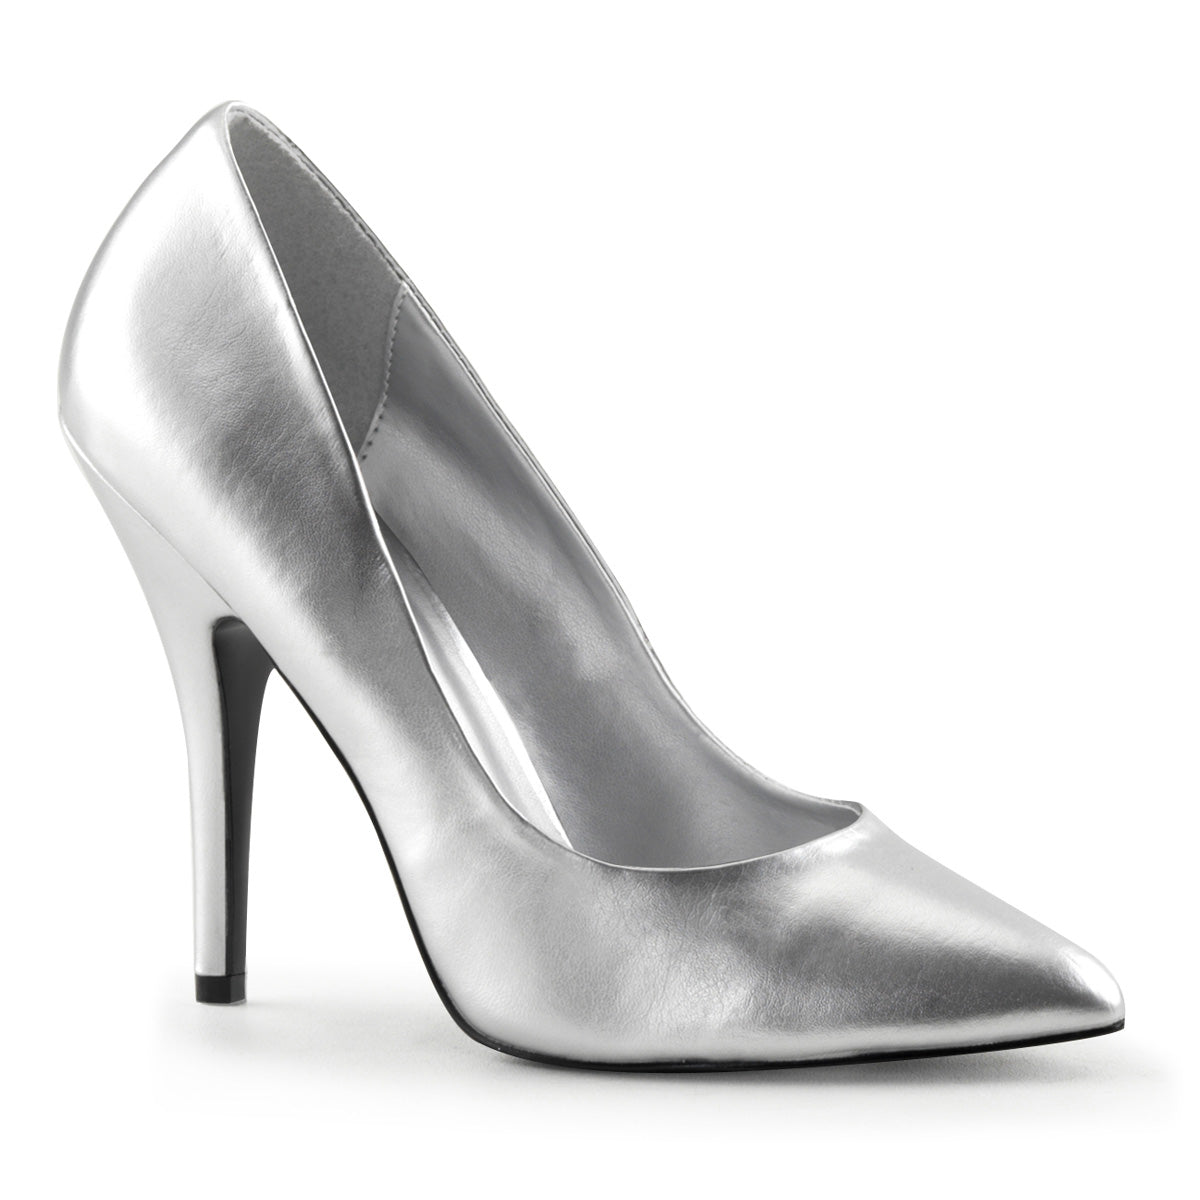 SEDUCE-420 Pleaser Sexy Shoes 5" Heel Silver Fetish Footwear-Pleaser- Sexy Shoes